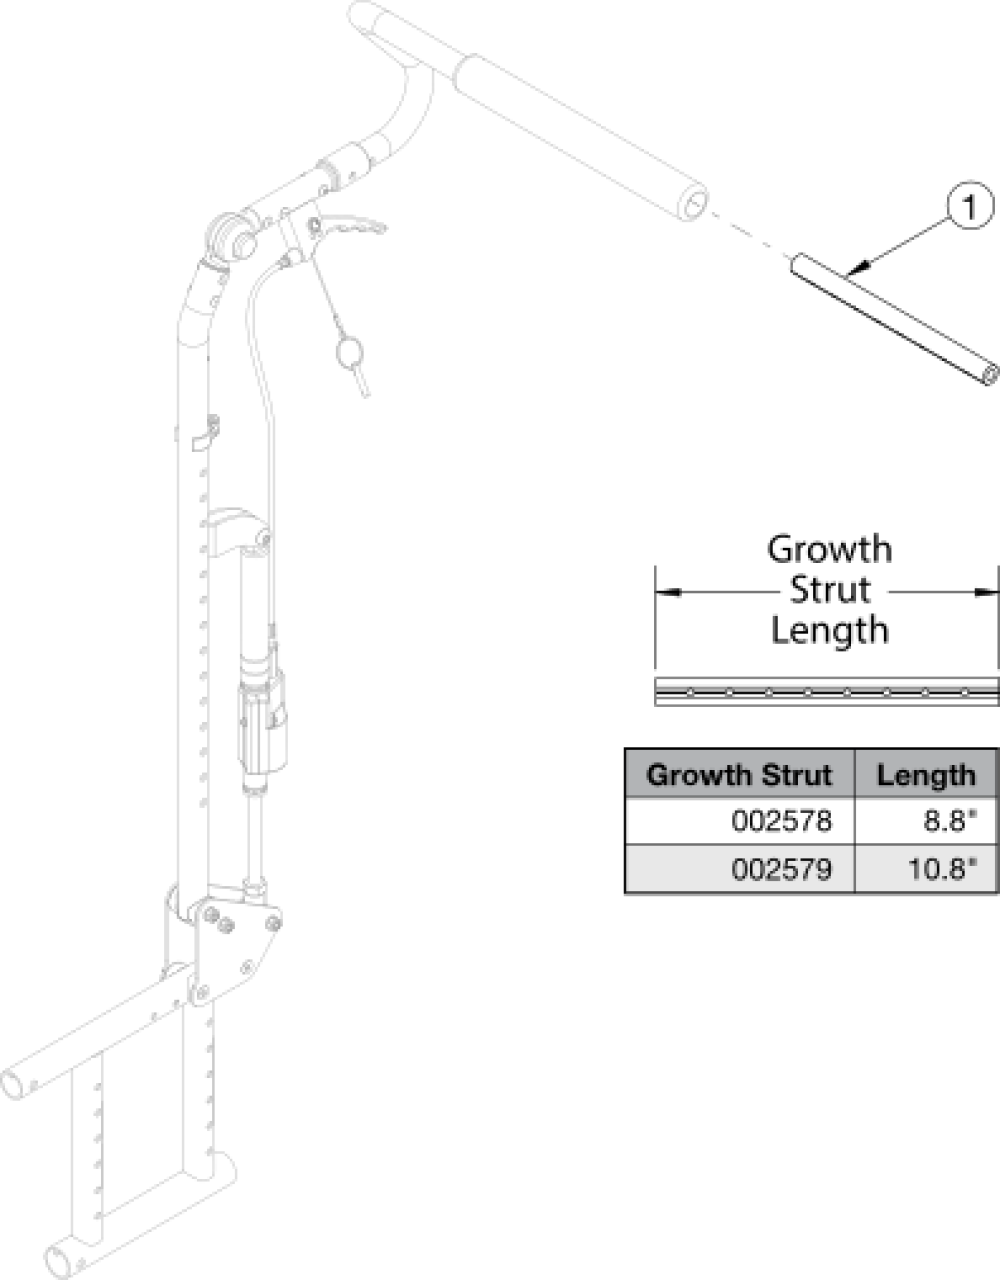 Growth Strut - Growth parts diagram